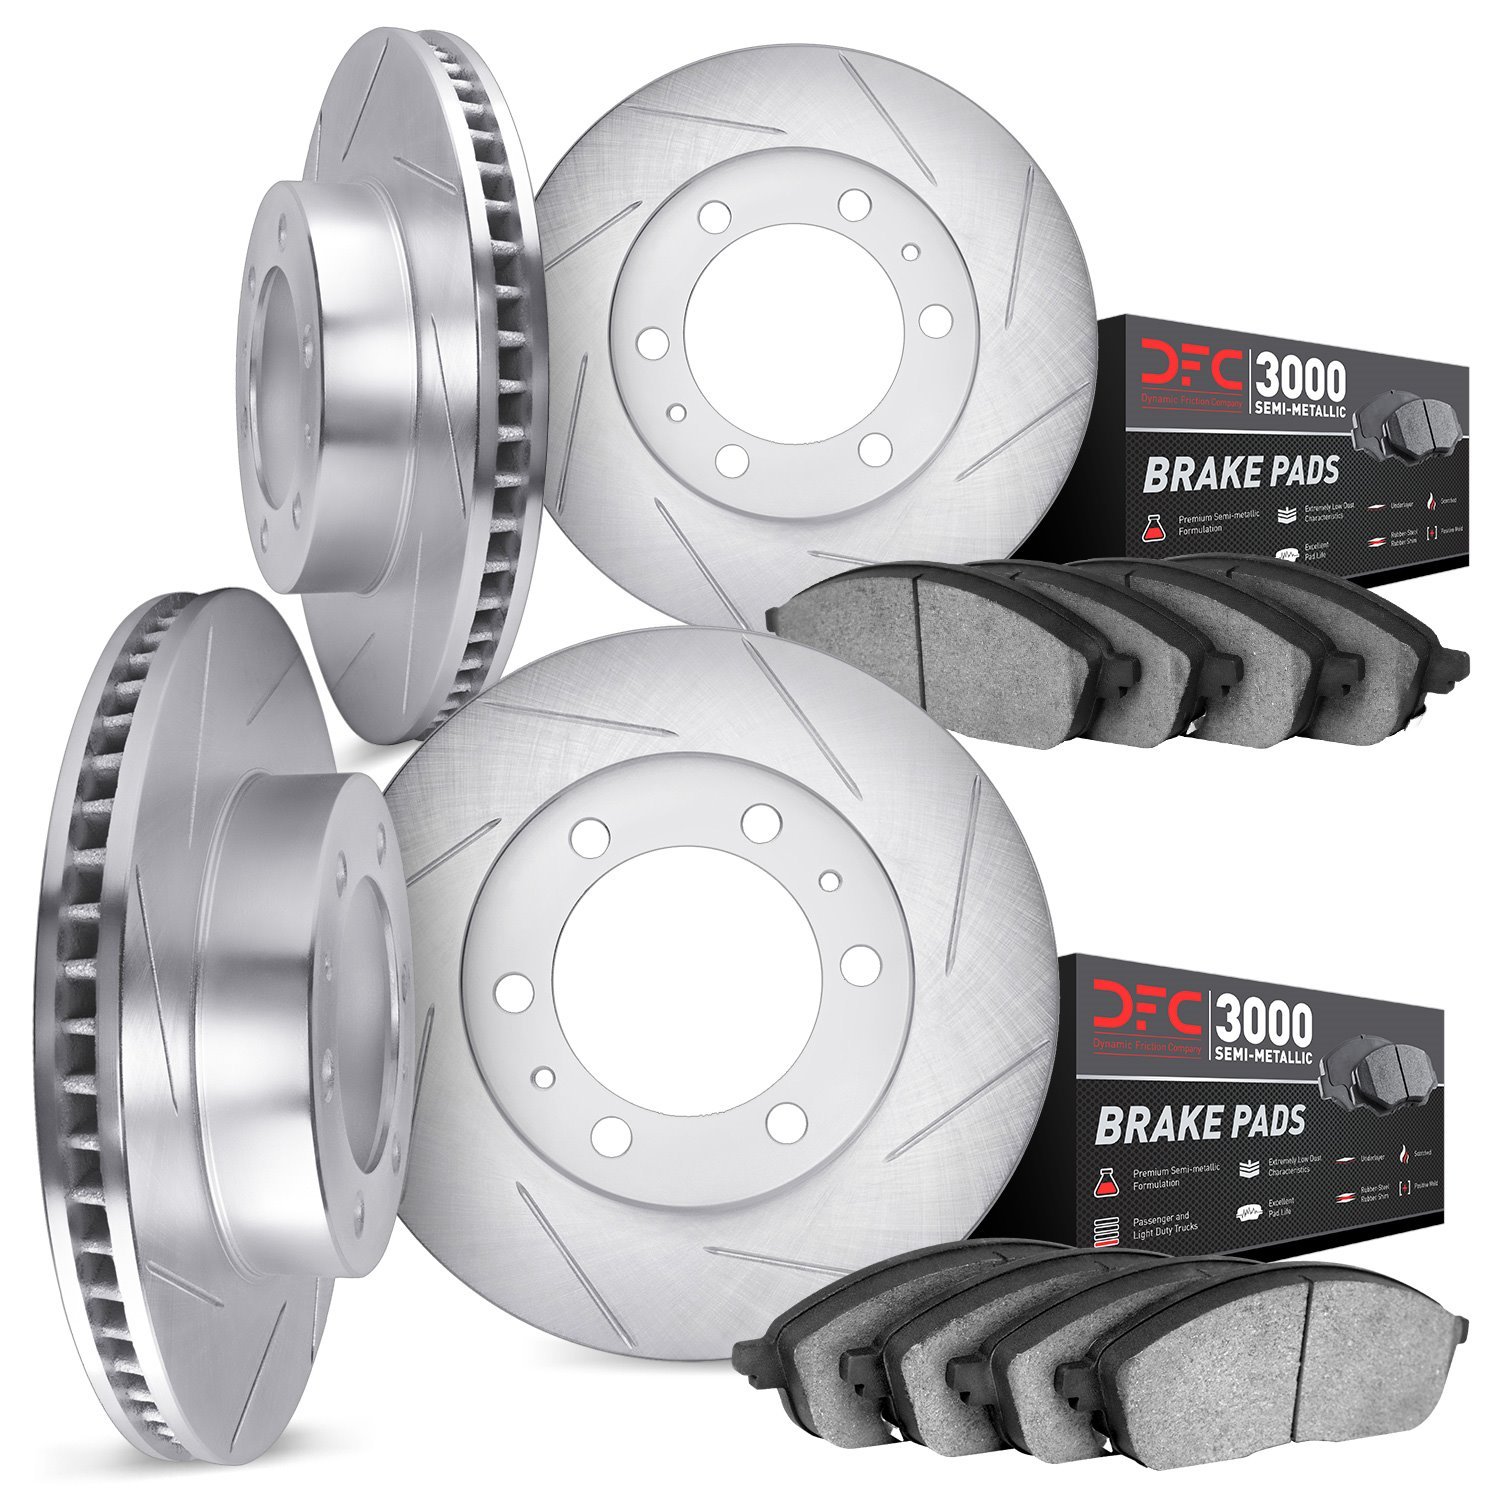 5114-67072 Slotted Brake Rotors with 3000-Series Semi-Metallic Brake Pads Kit & Hardware [Silver], Fits Select Infiniti/Nissan,